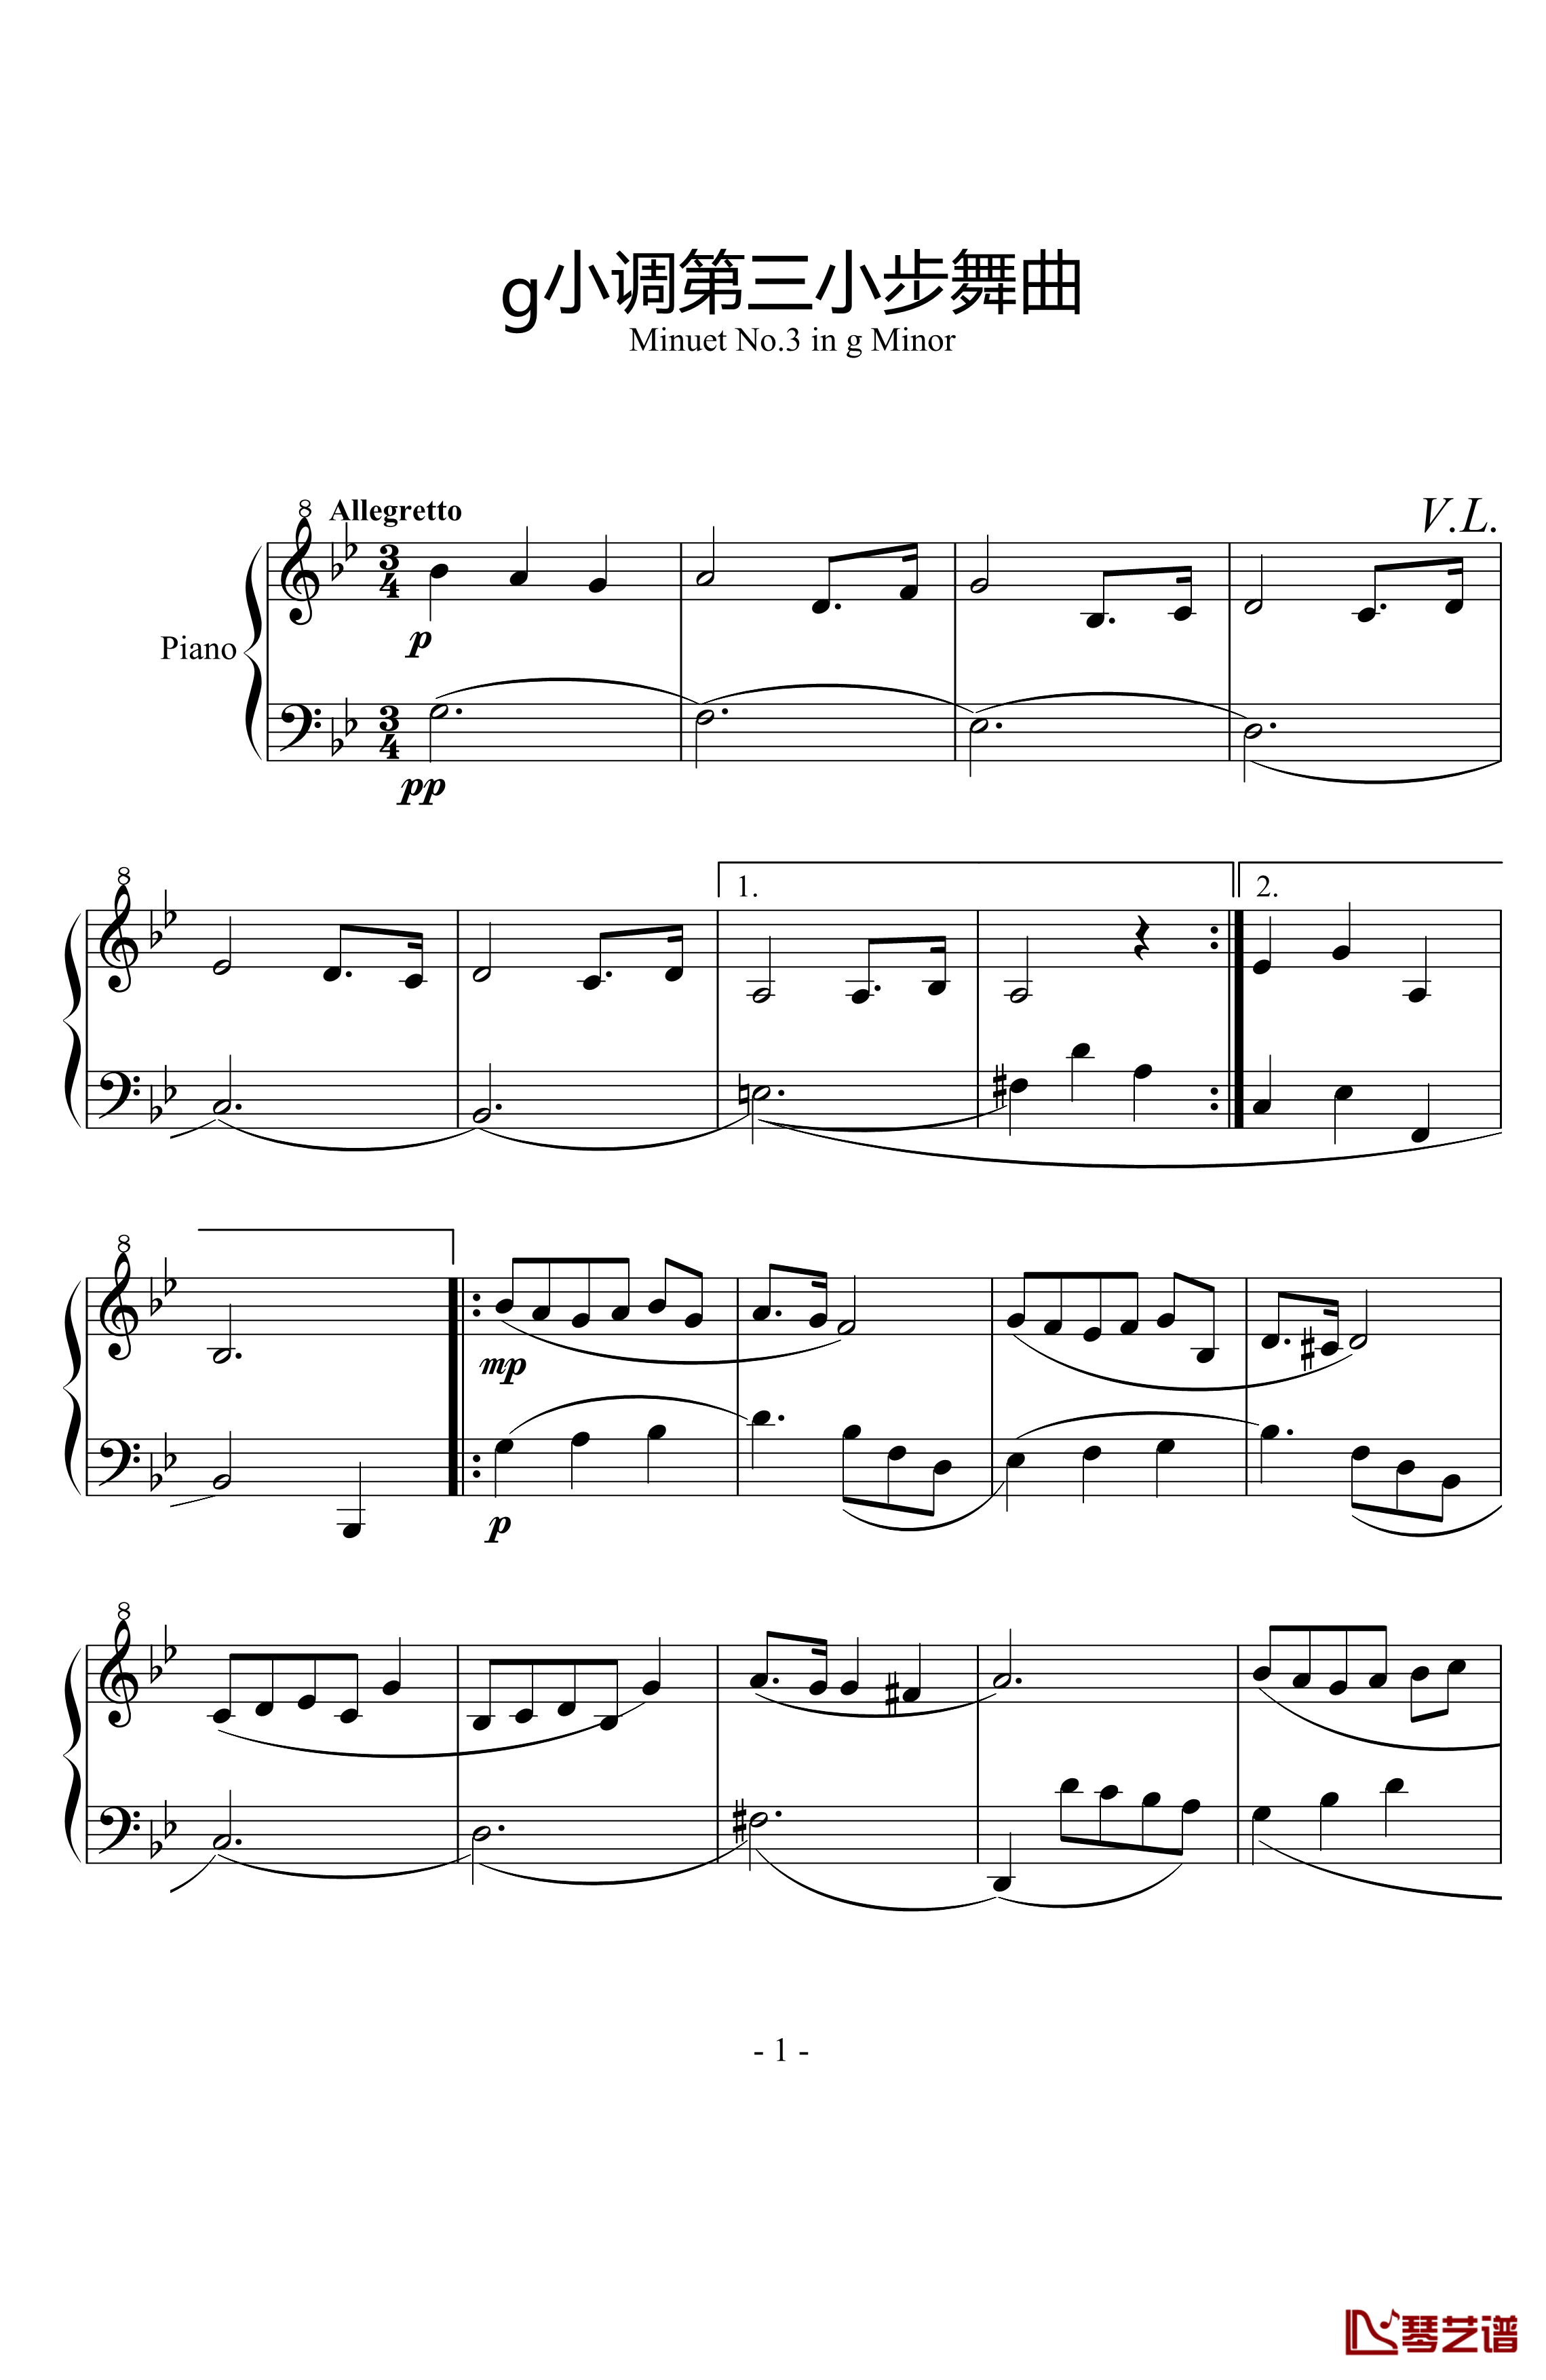 g小调第三小步舞曲钢琴谱-zzmx09161